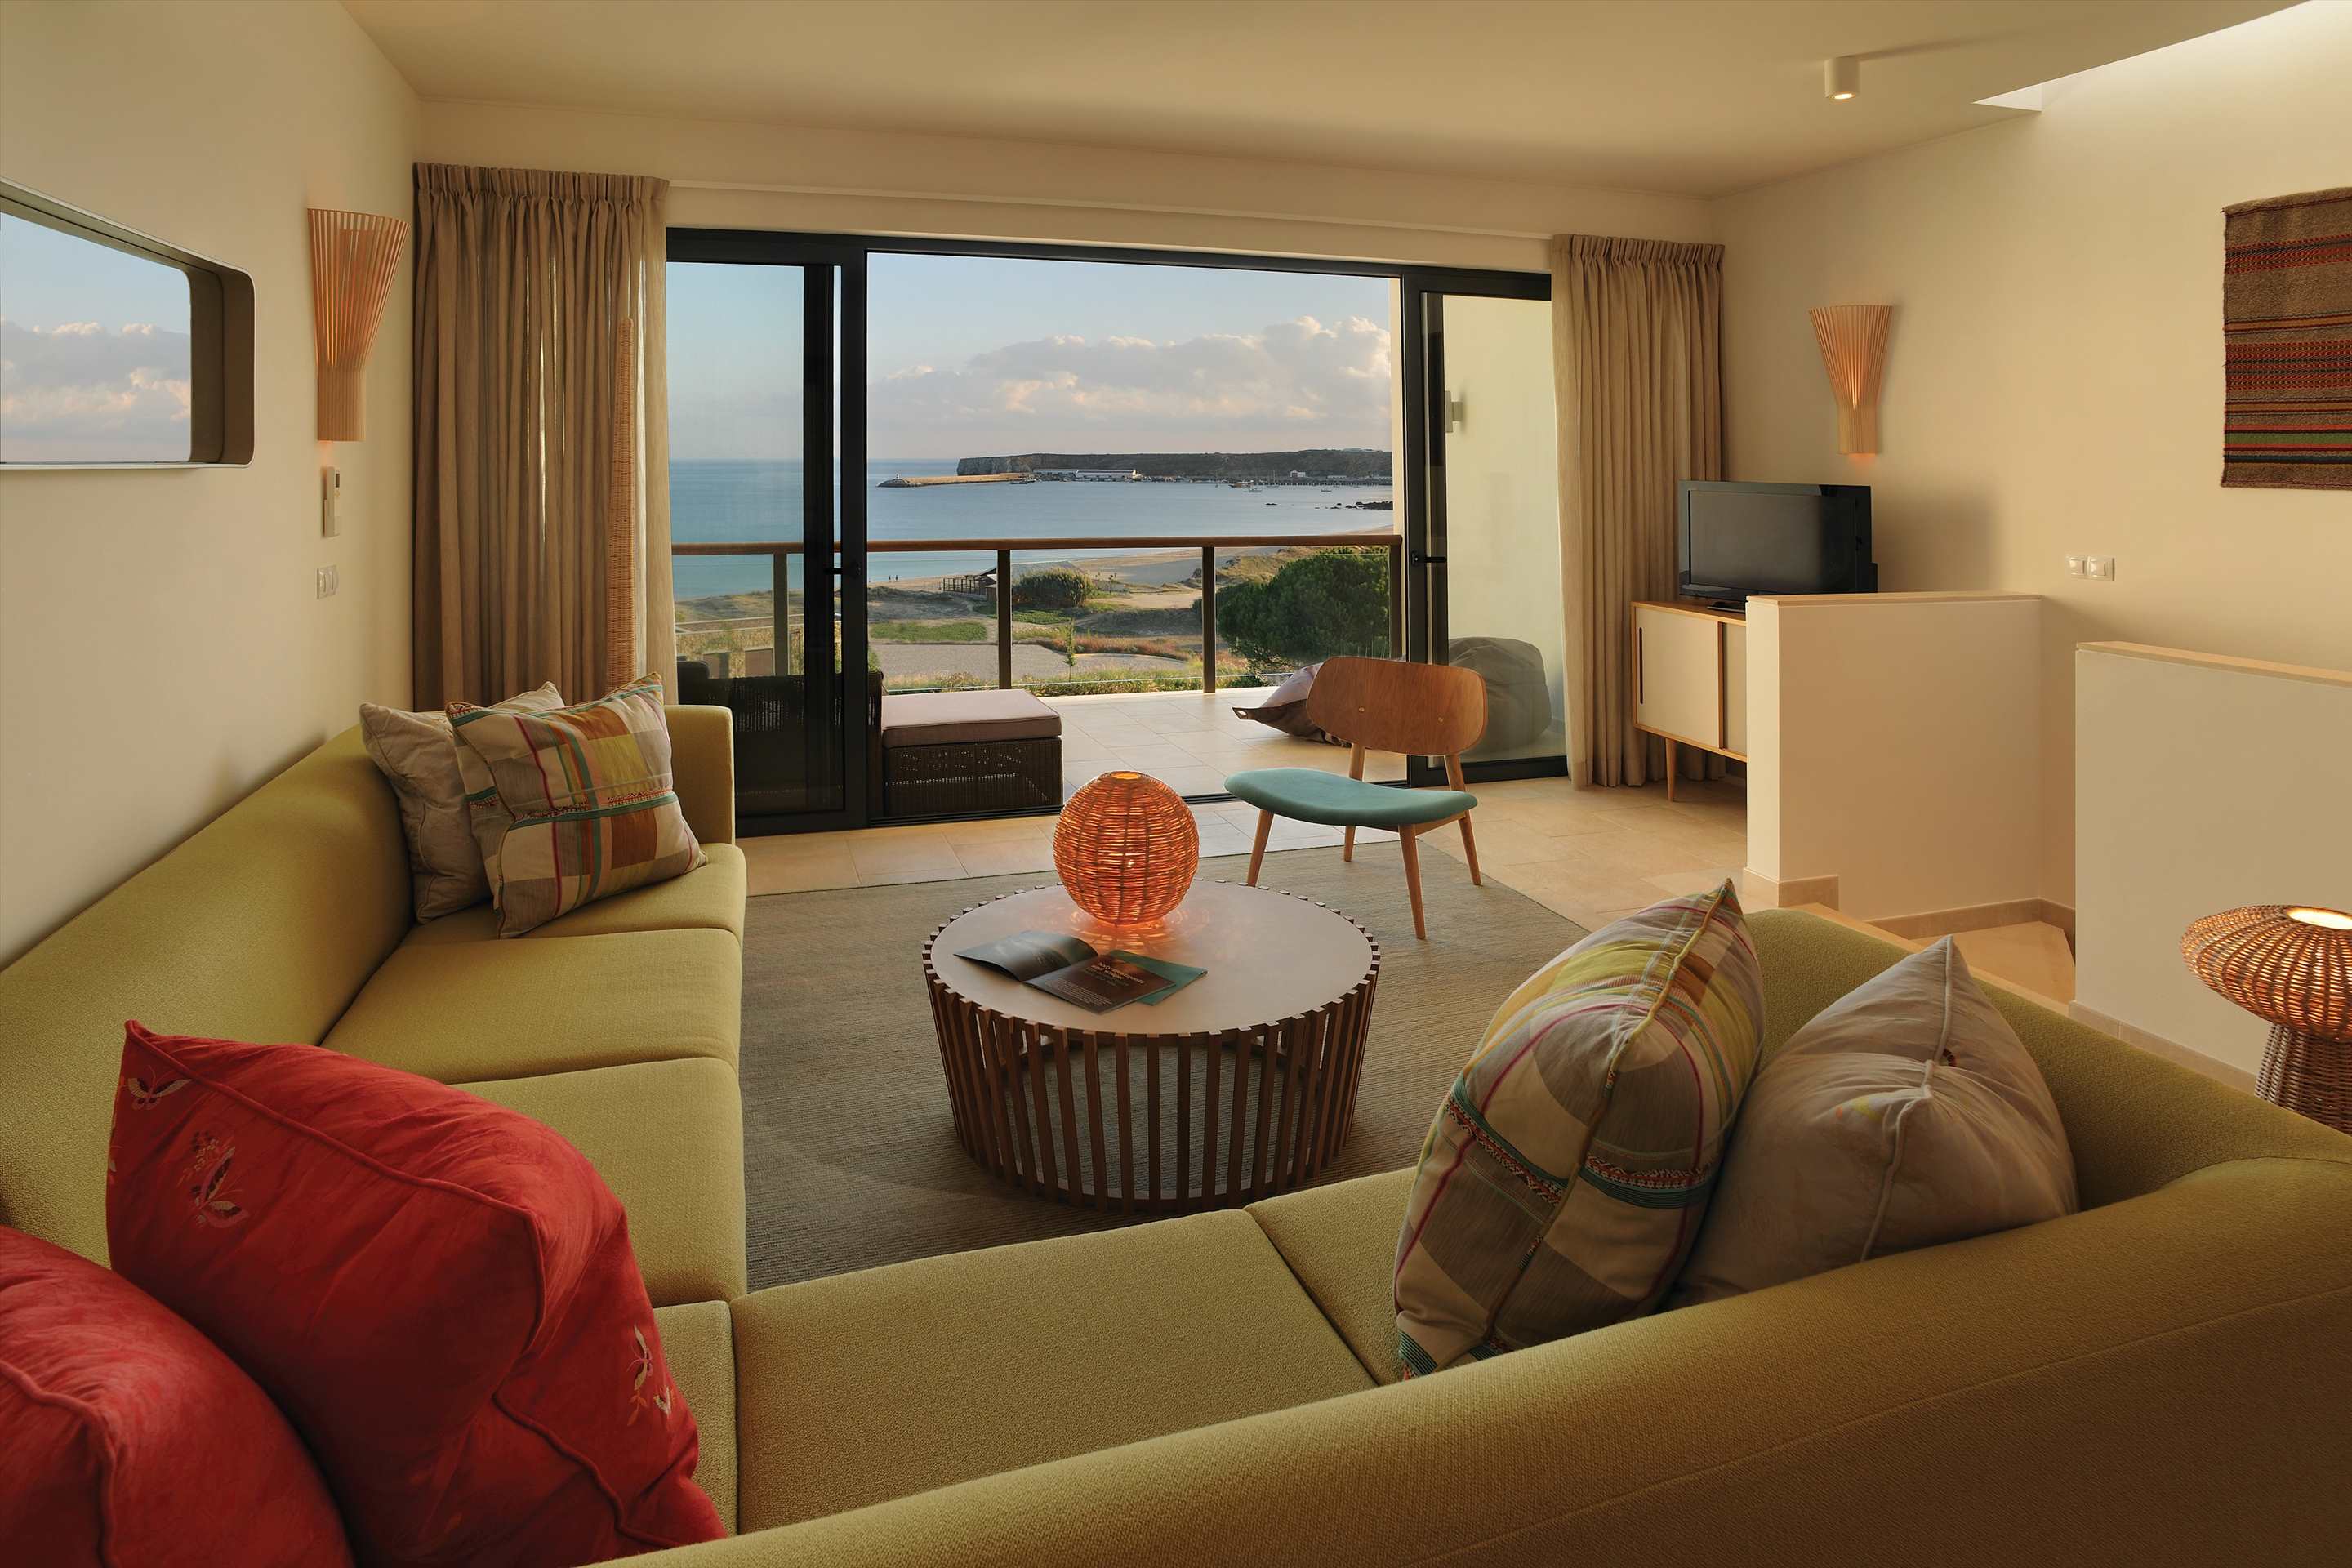 Martinhal Village Ocean House, full ocean view, Grand Deluxe Two Bedroom, 2 bedroom villa in Martinhal Sagres, Algarve